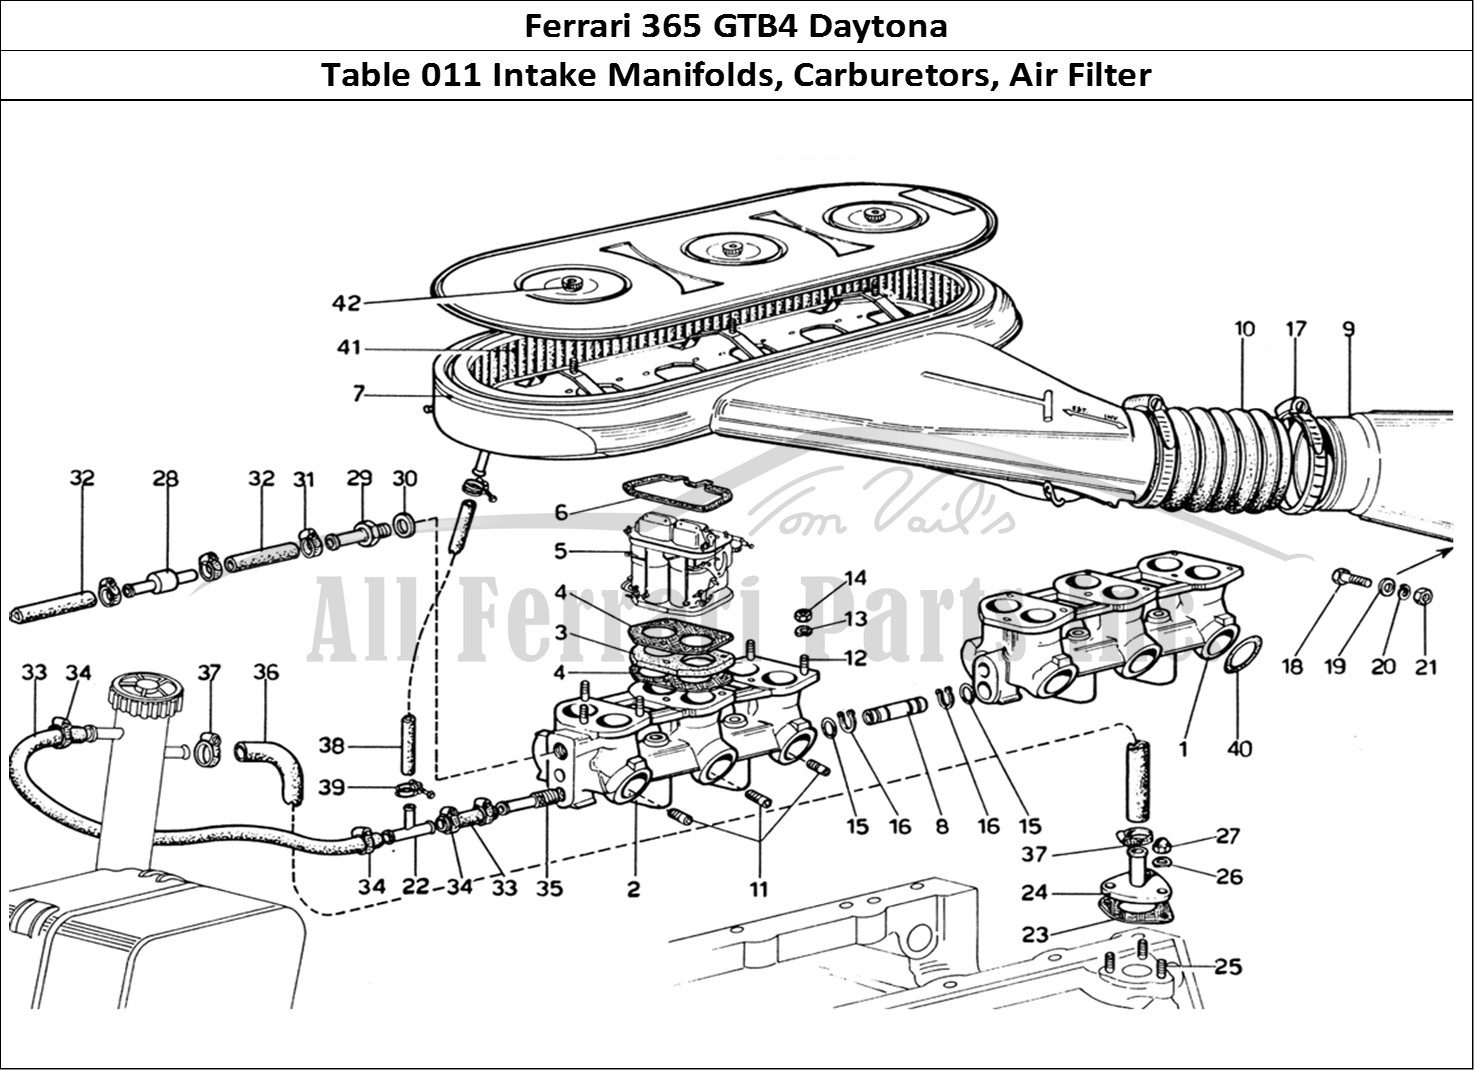 Ferrari Parts Ferrari 365 GTB4 Daytona (1969) Page 011 Intake Manifolds - Air In